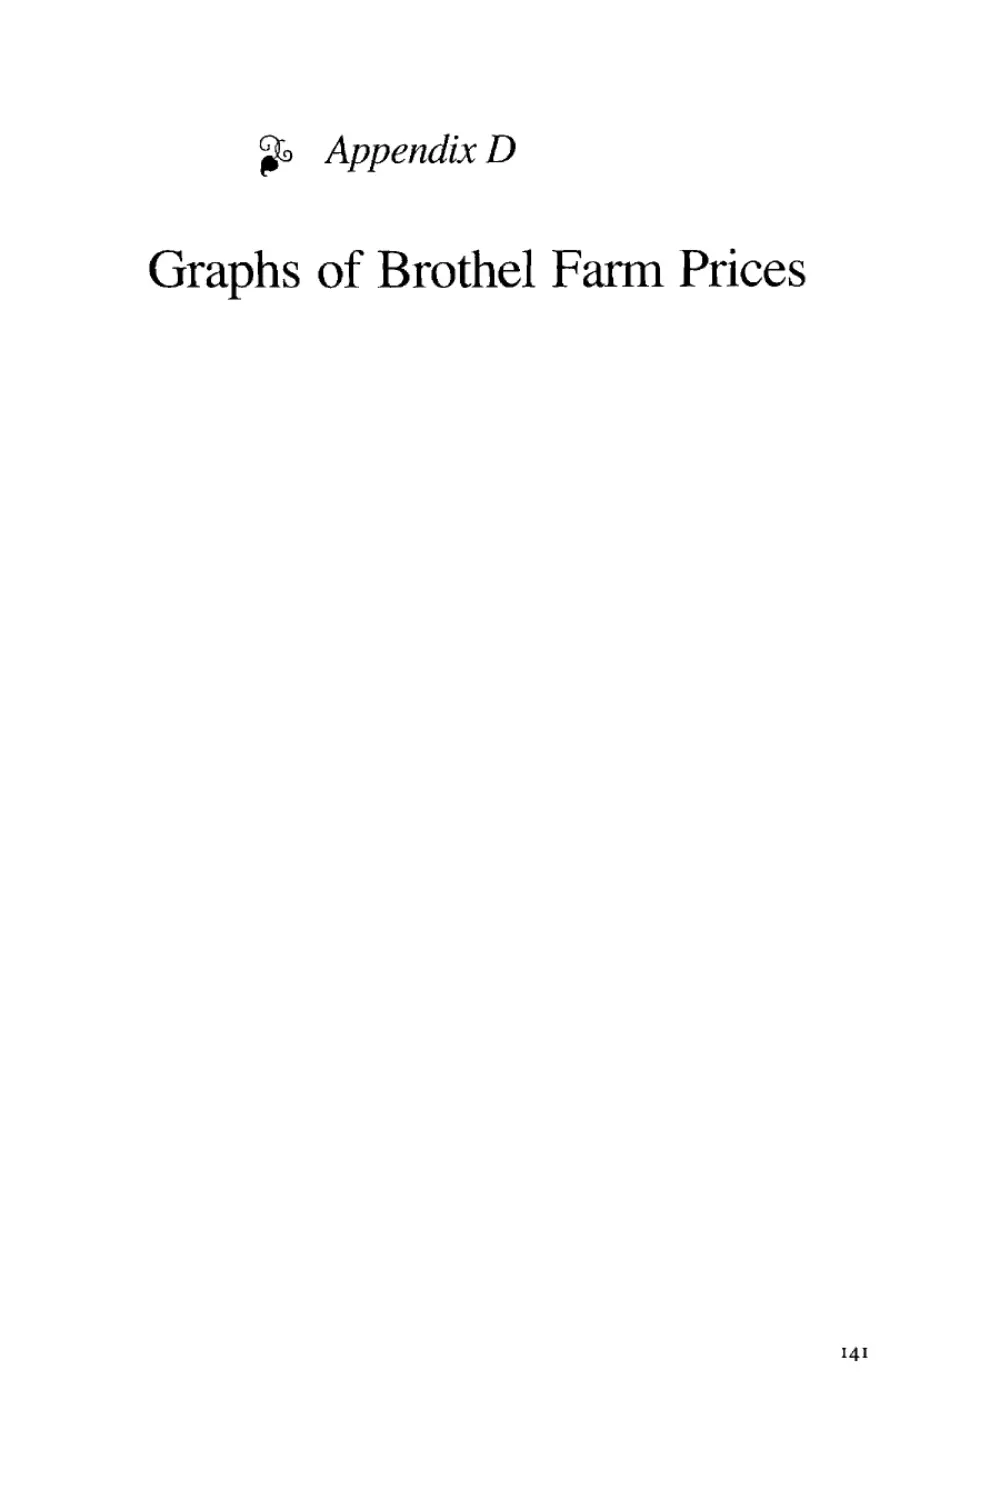 Appendix D: Graphs of Brothel Farm Prices